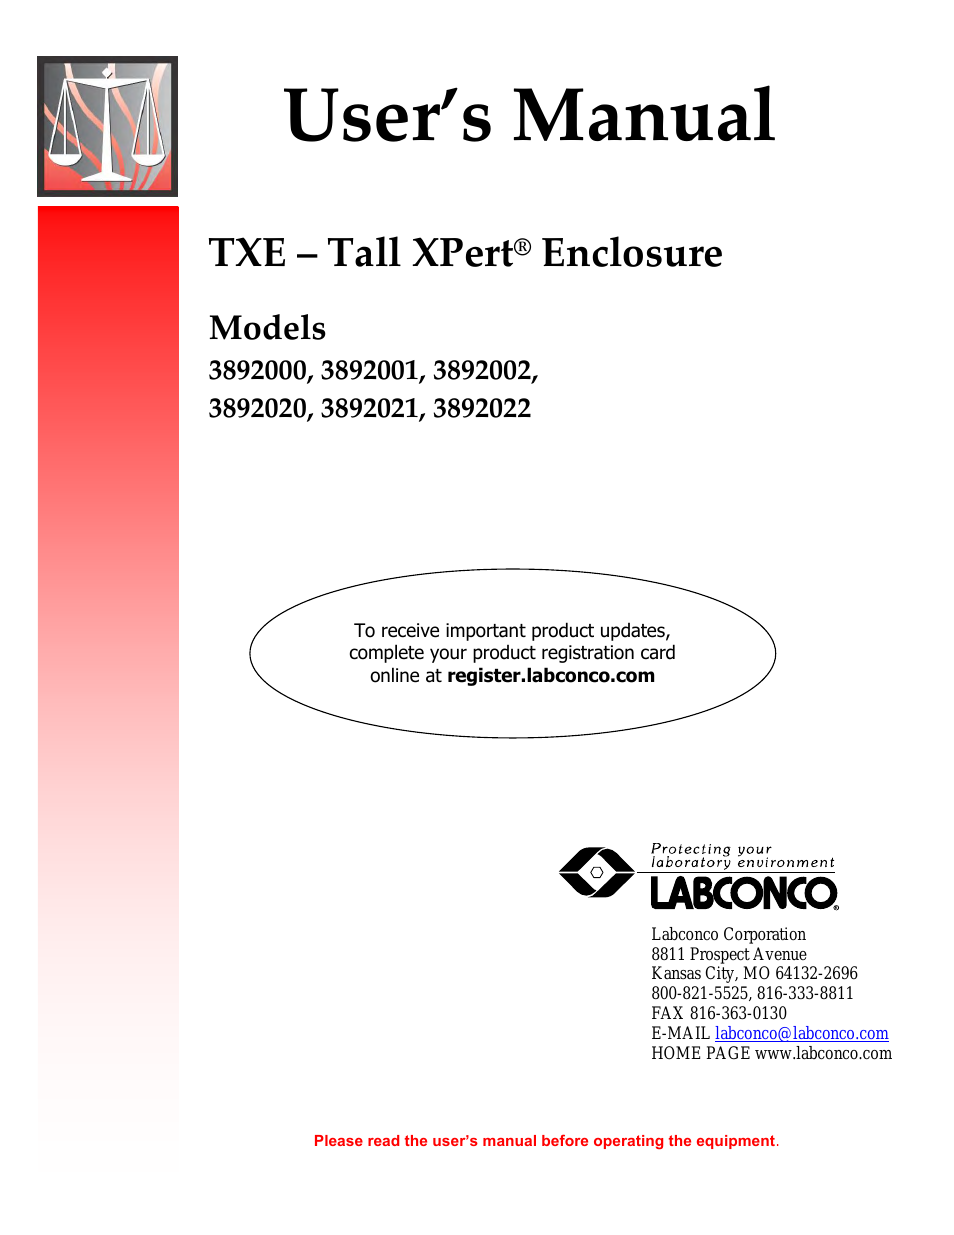 TXE Tall XPerEnclosure 3892020